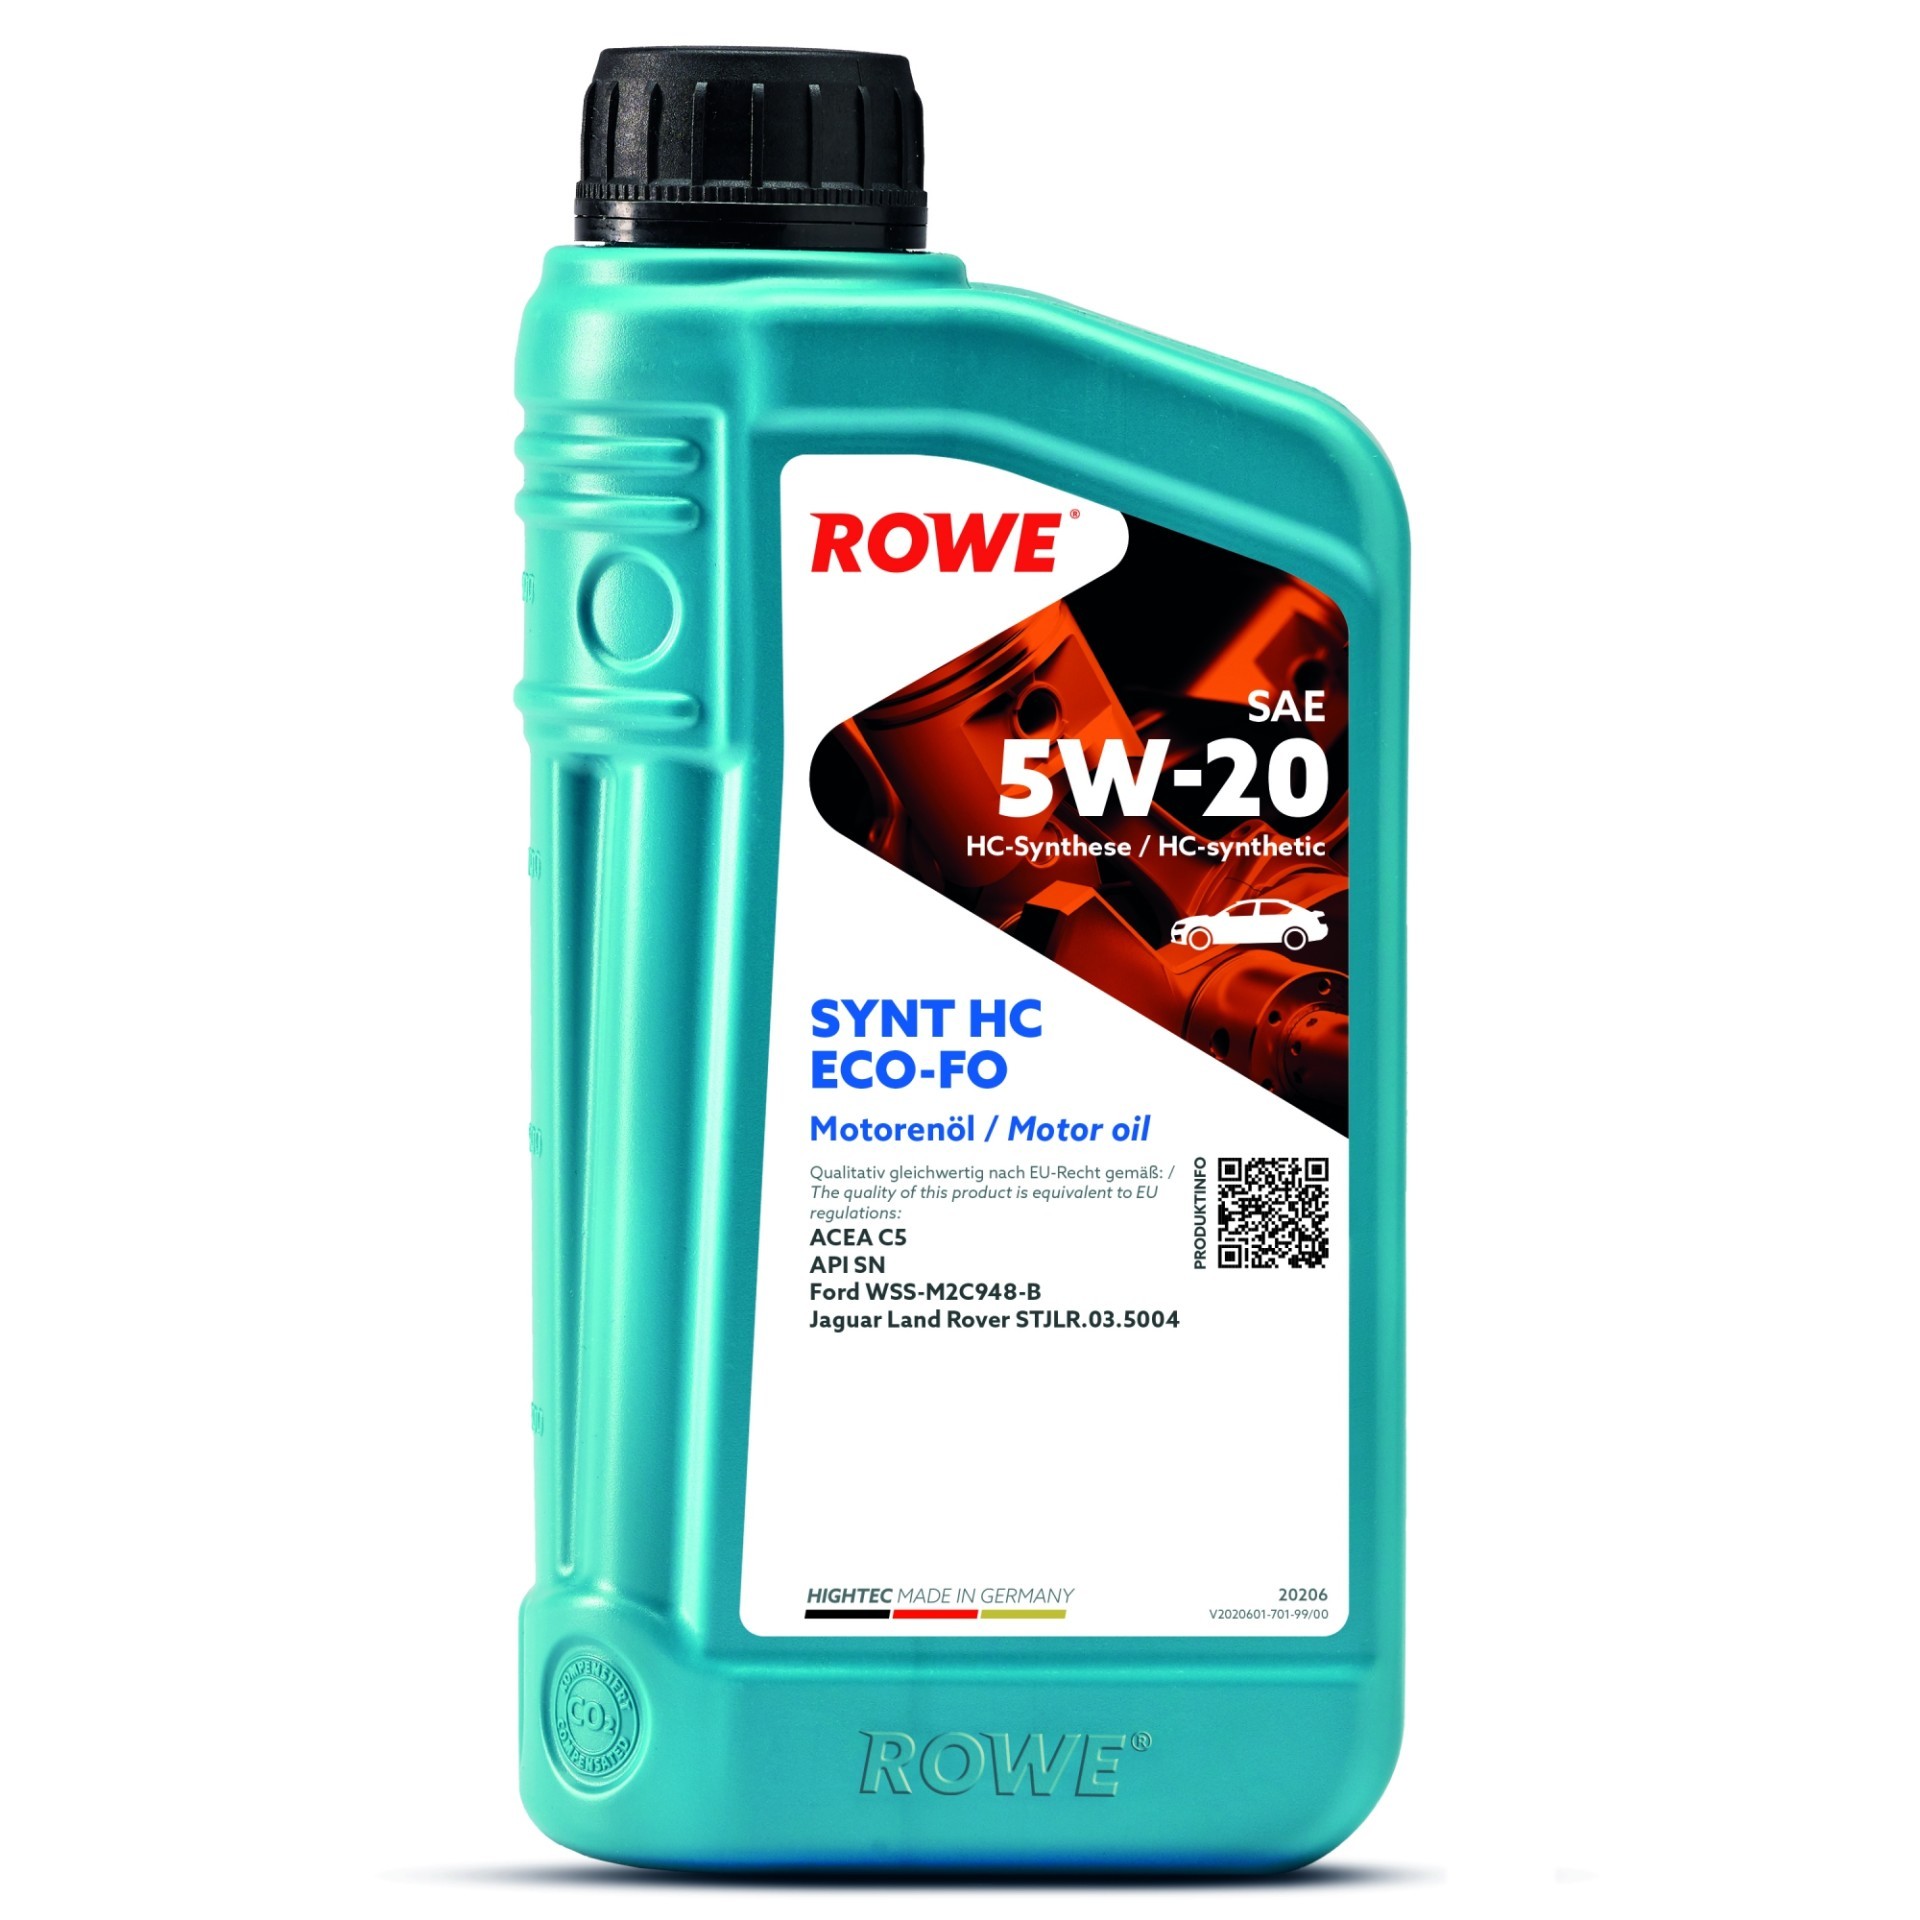 ROWE HIGHTEC SYNT HC ECO-FO SAE 5W-20 (20206) Teilsynthetiköl 1 L